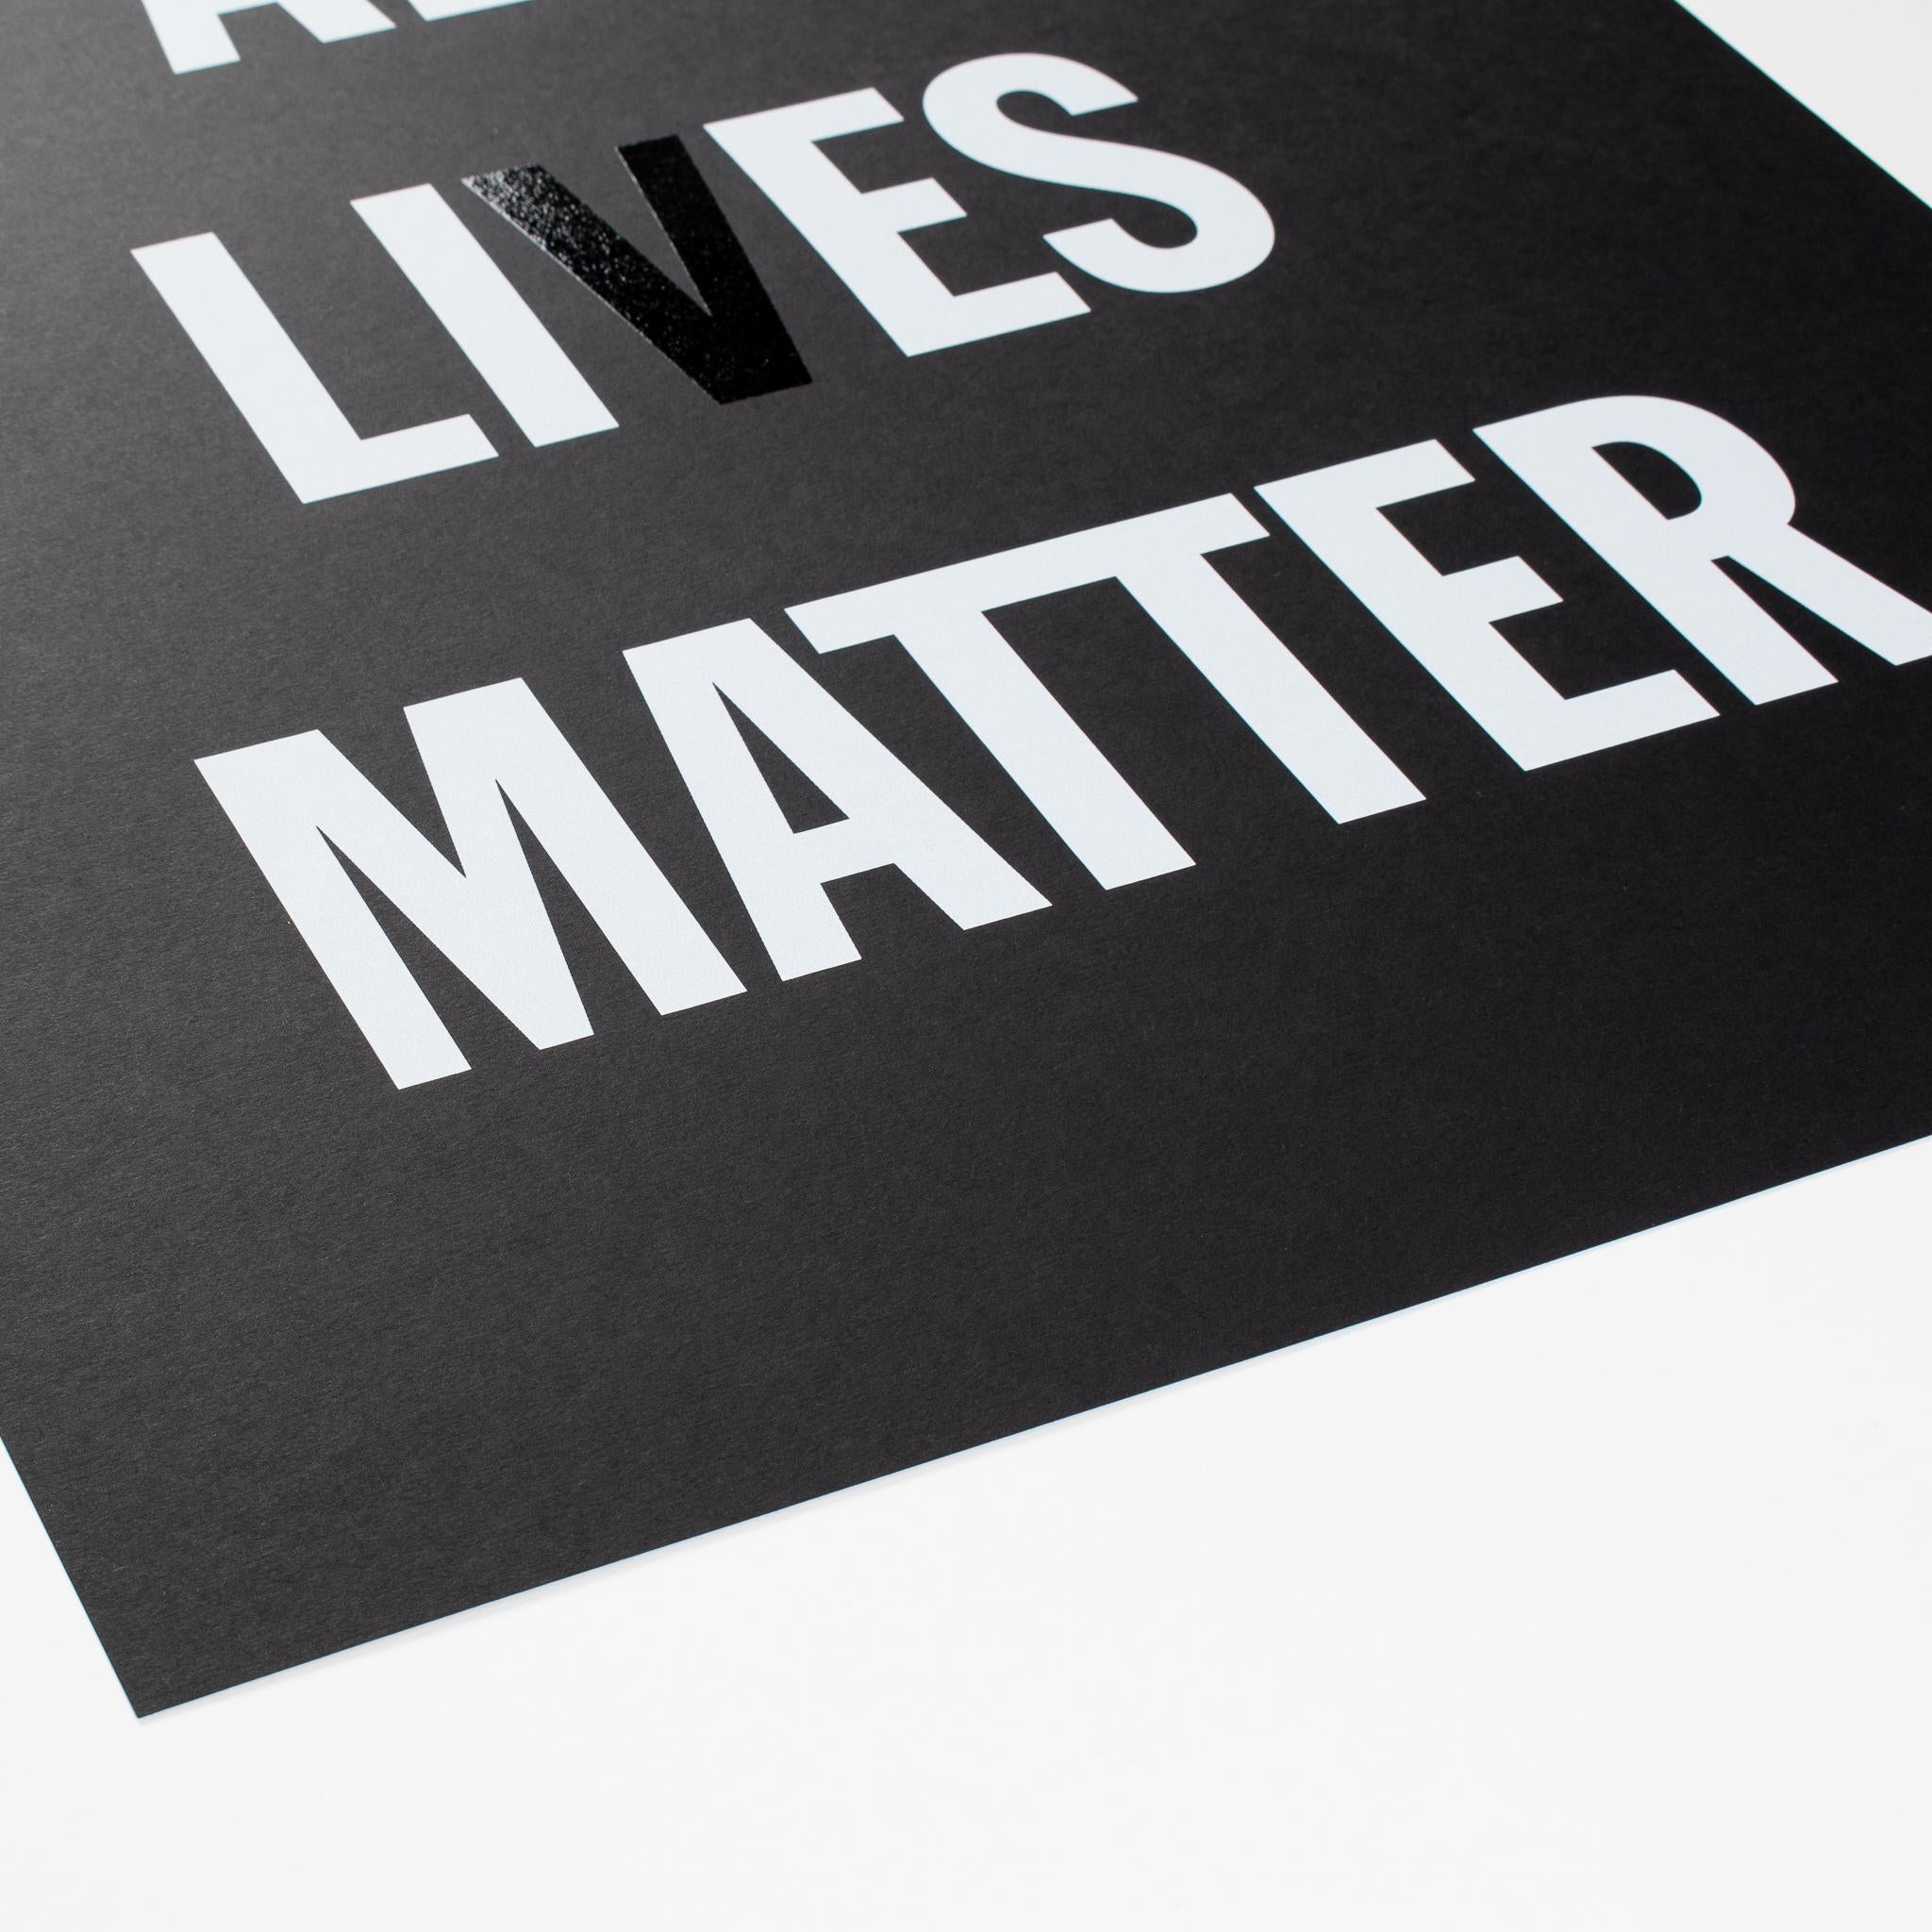 All Li es Matter - Black Print by Hank Willis Thomas